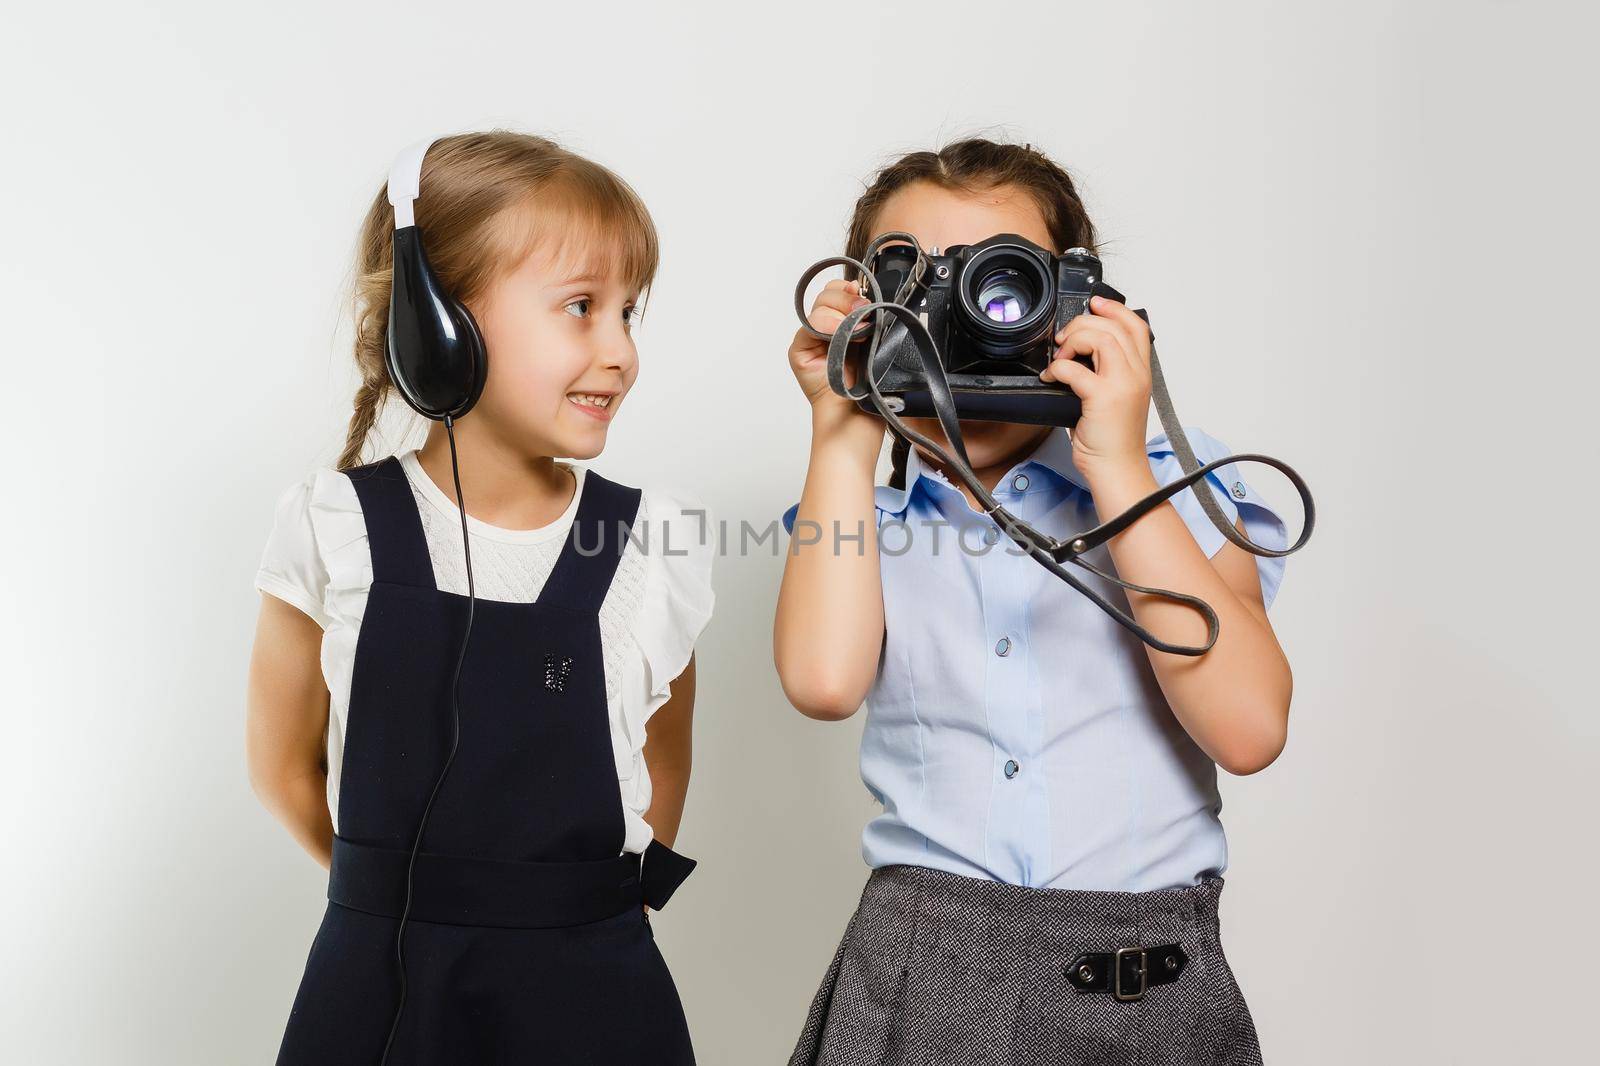 Two adorable little schoolgirls for a break by Andelov13